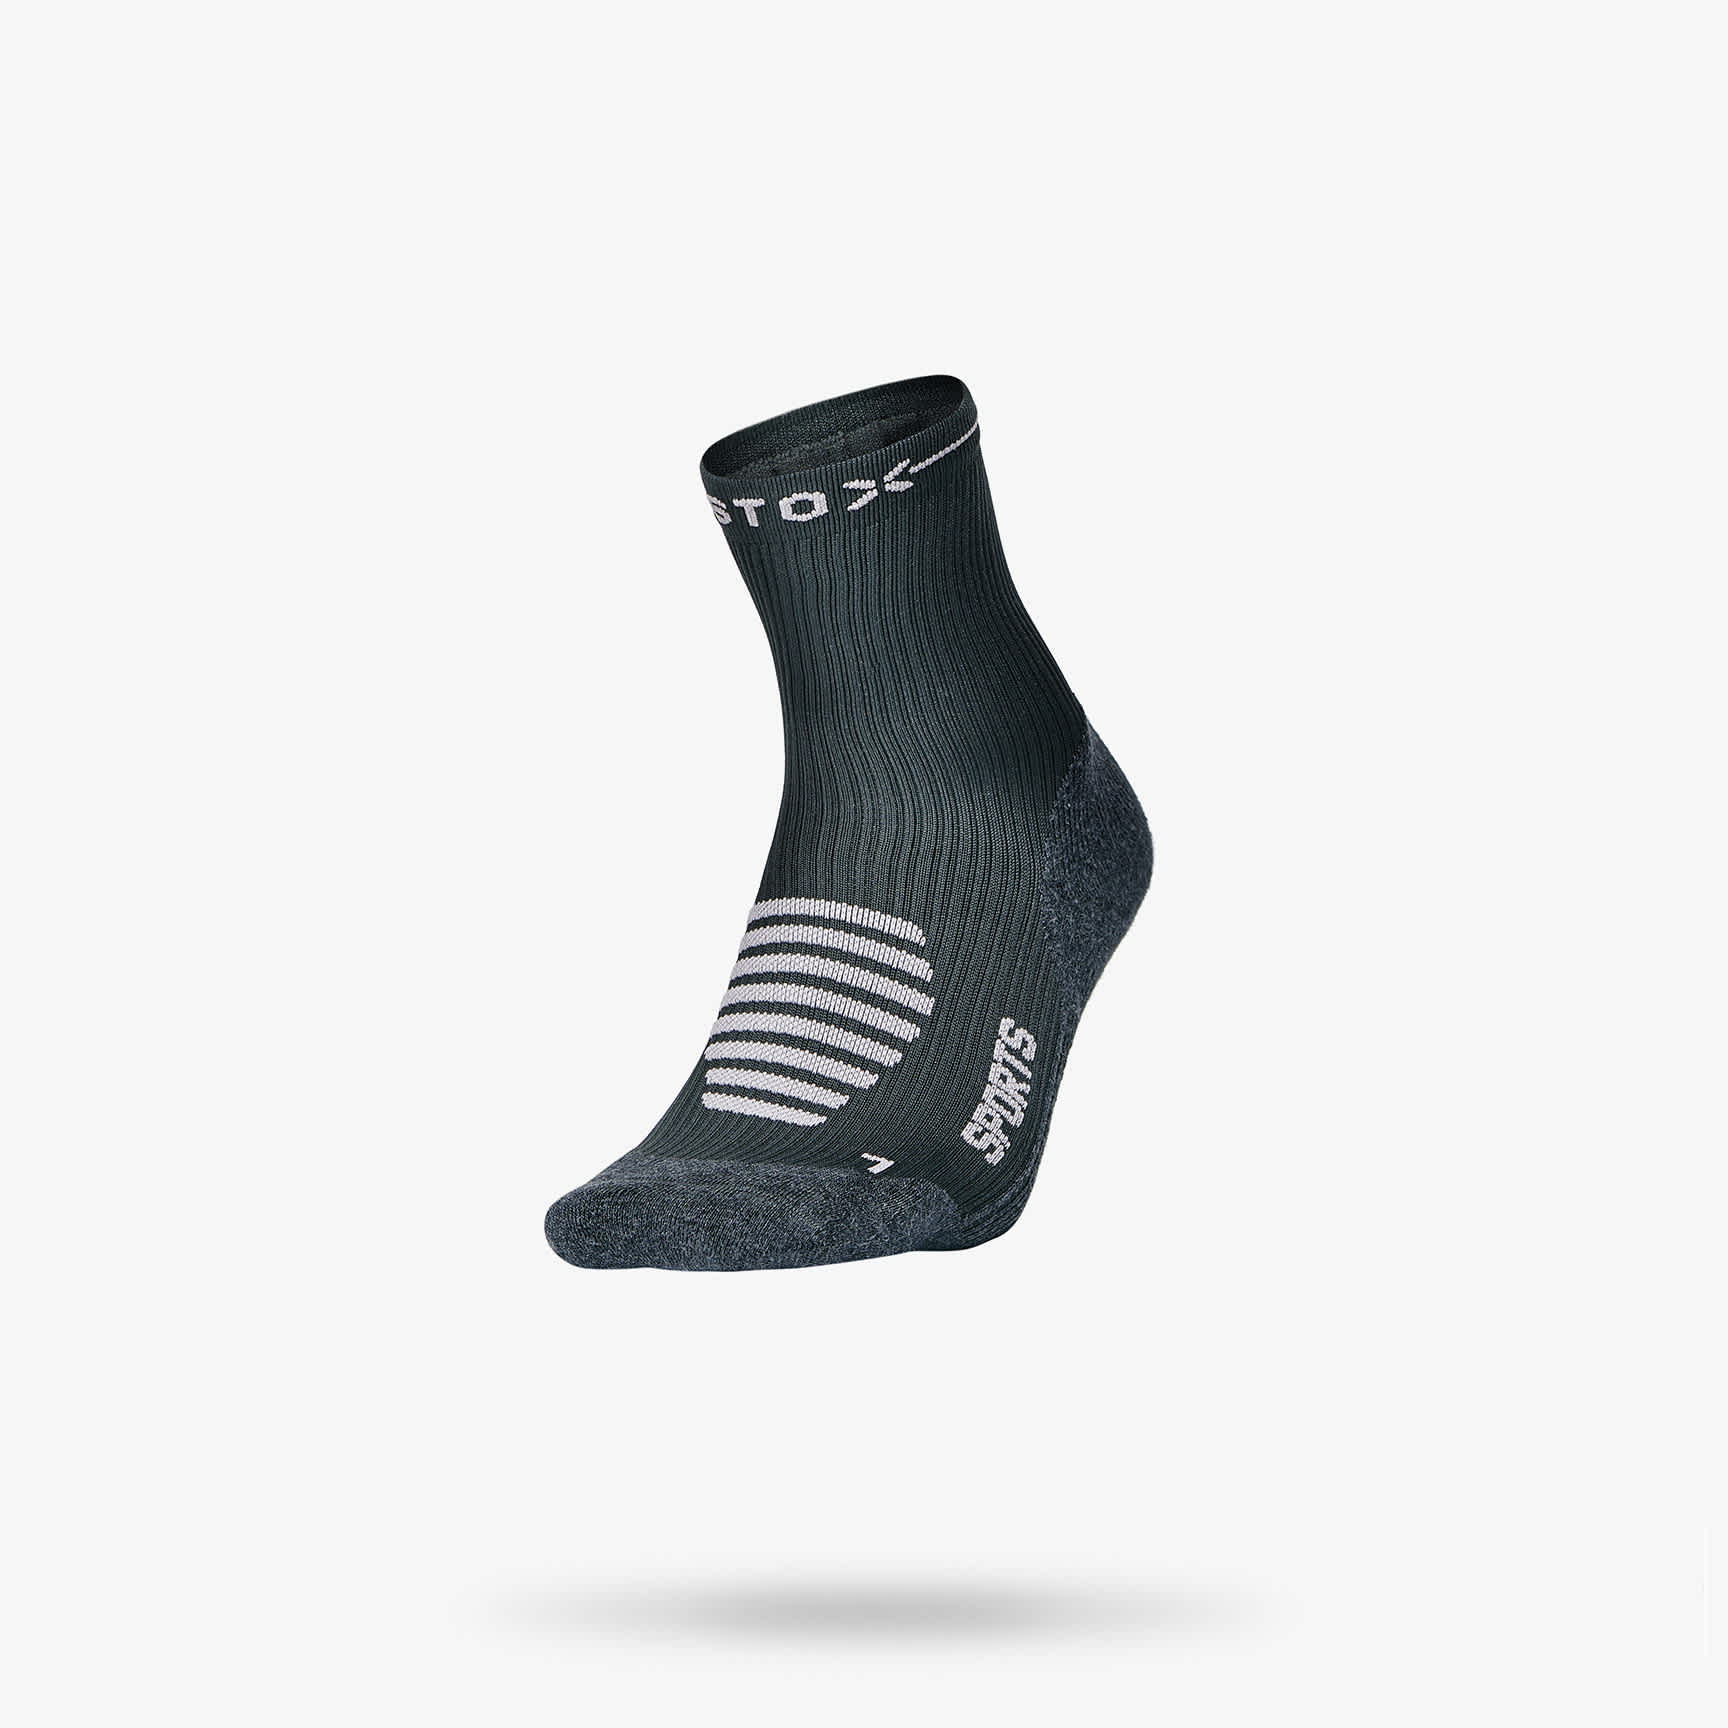 Womens Sport Compression Socks | STOX Energy Socks